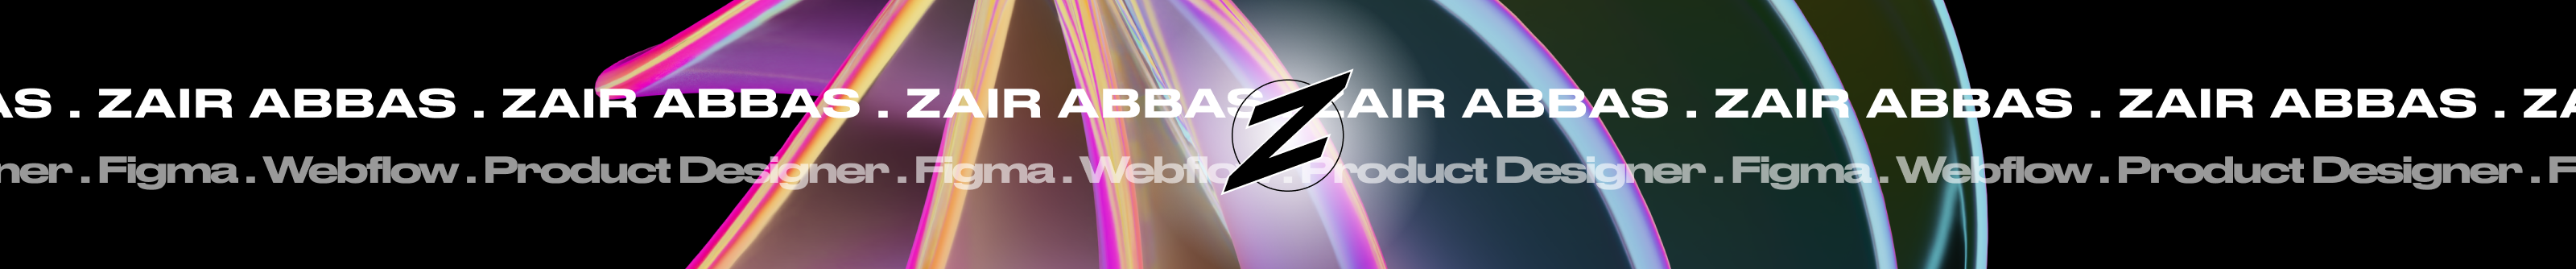 Zair Abbas's profile banner